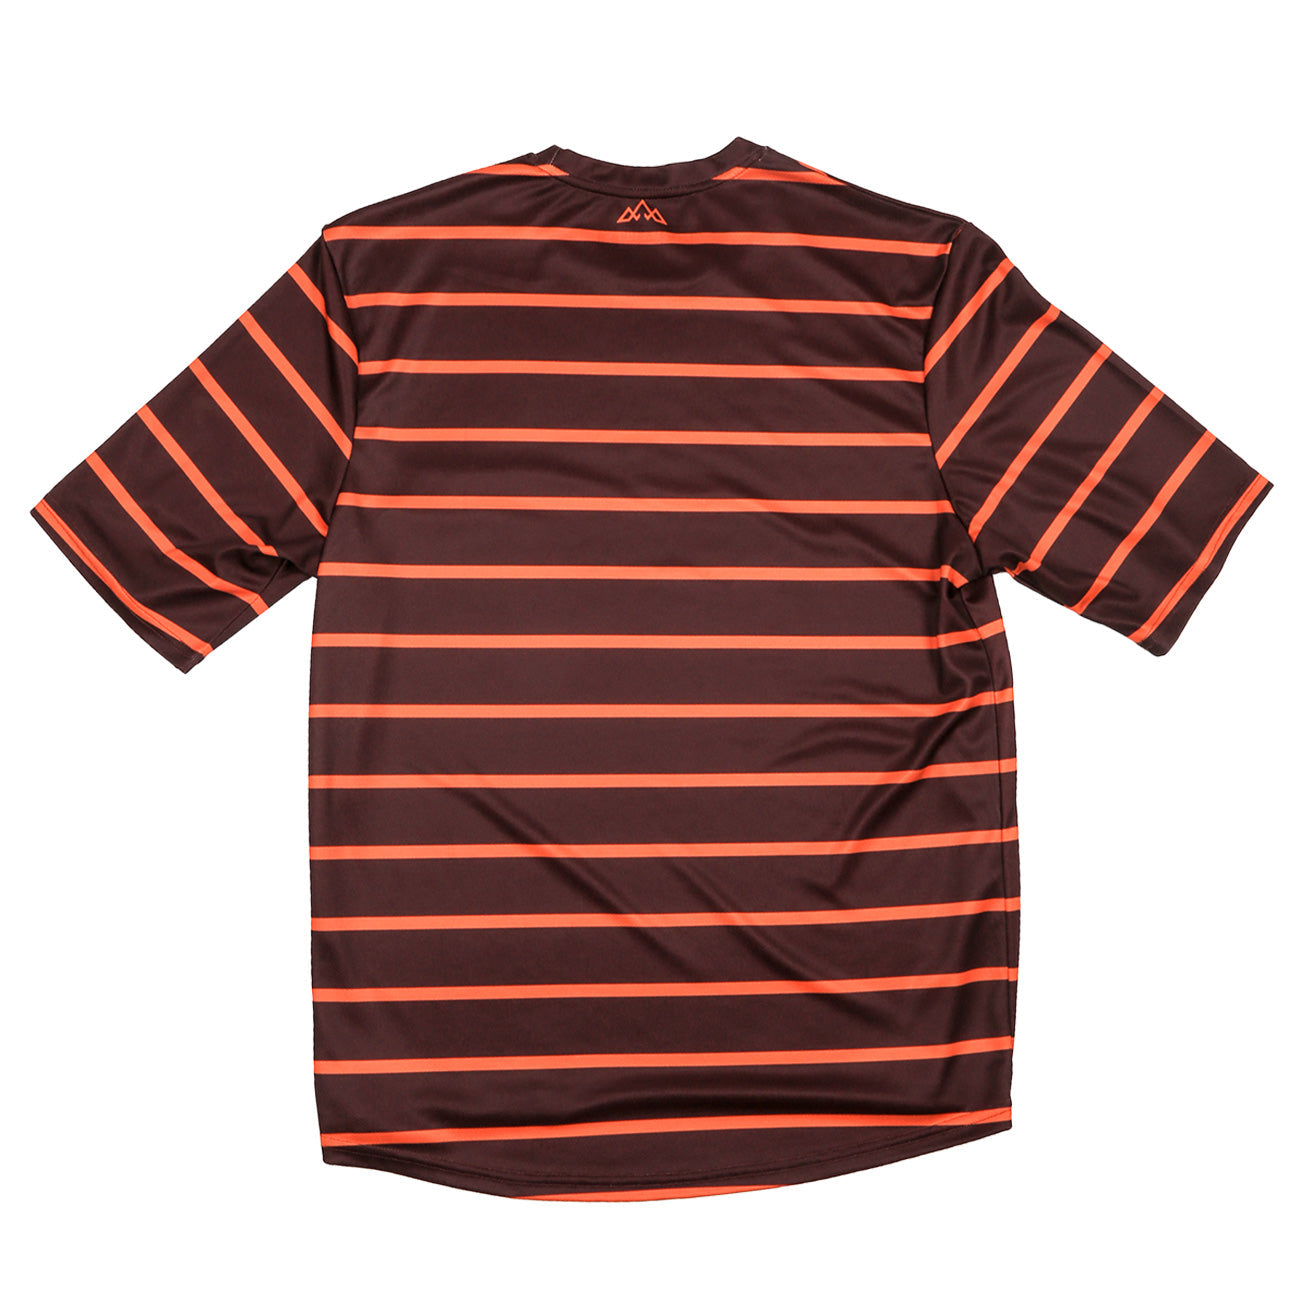 TASCOMTB Old Town Trail Jersey Short Sleeve maroon/orange stripe back